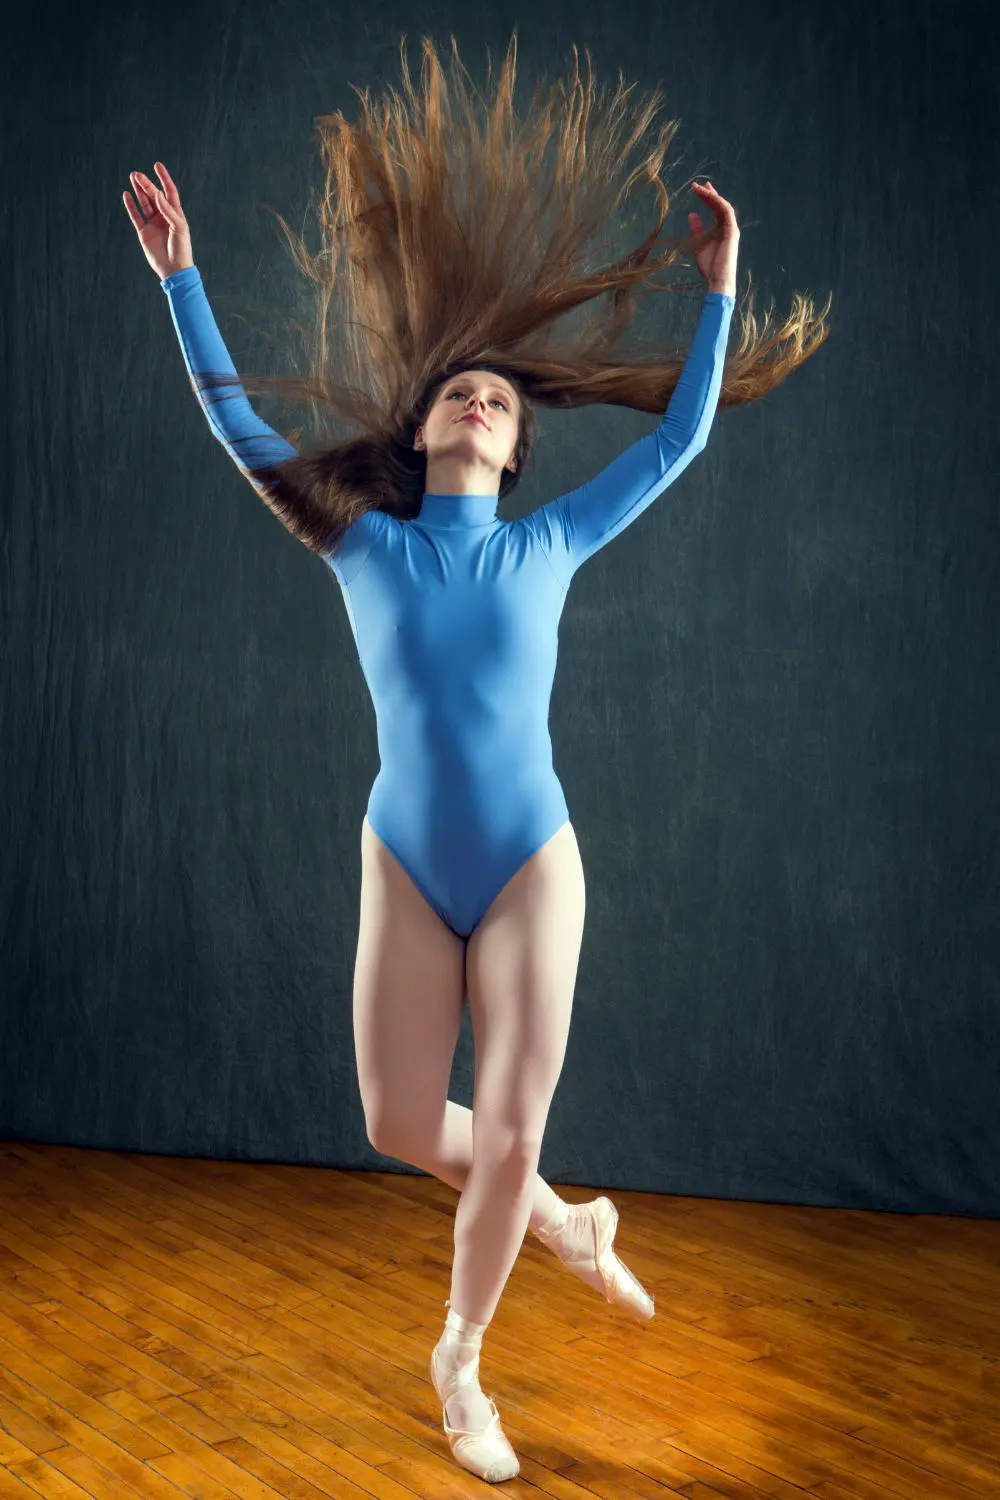 Girl performing gymnastic wearing a blue leotard